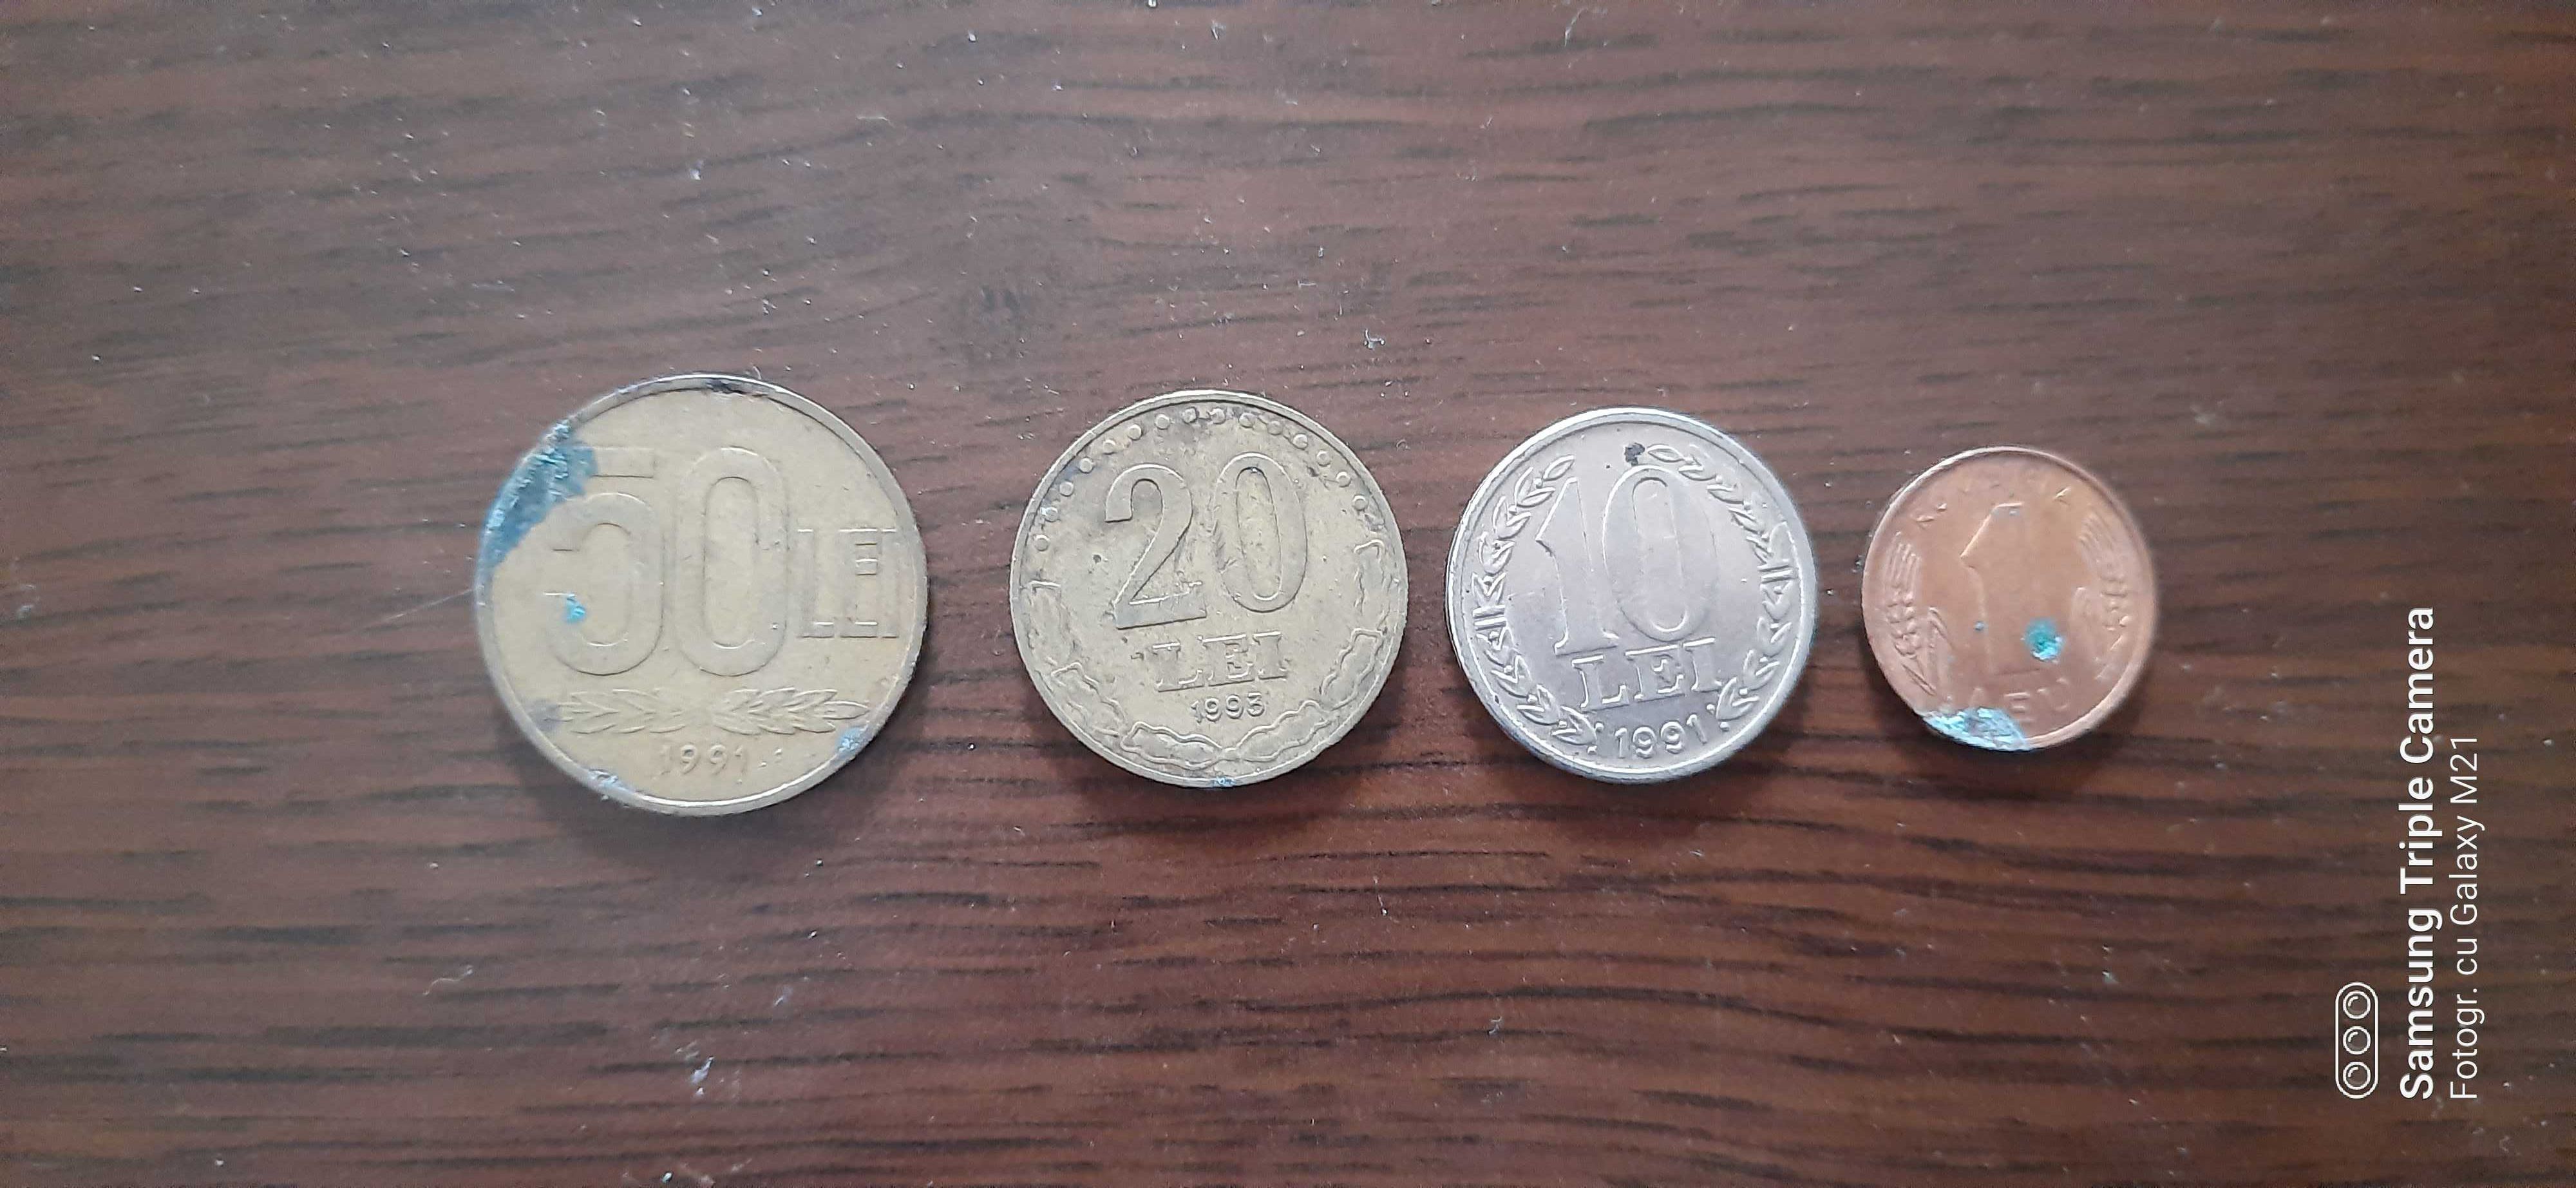 Monede comuniste